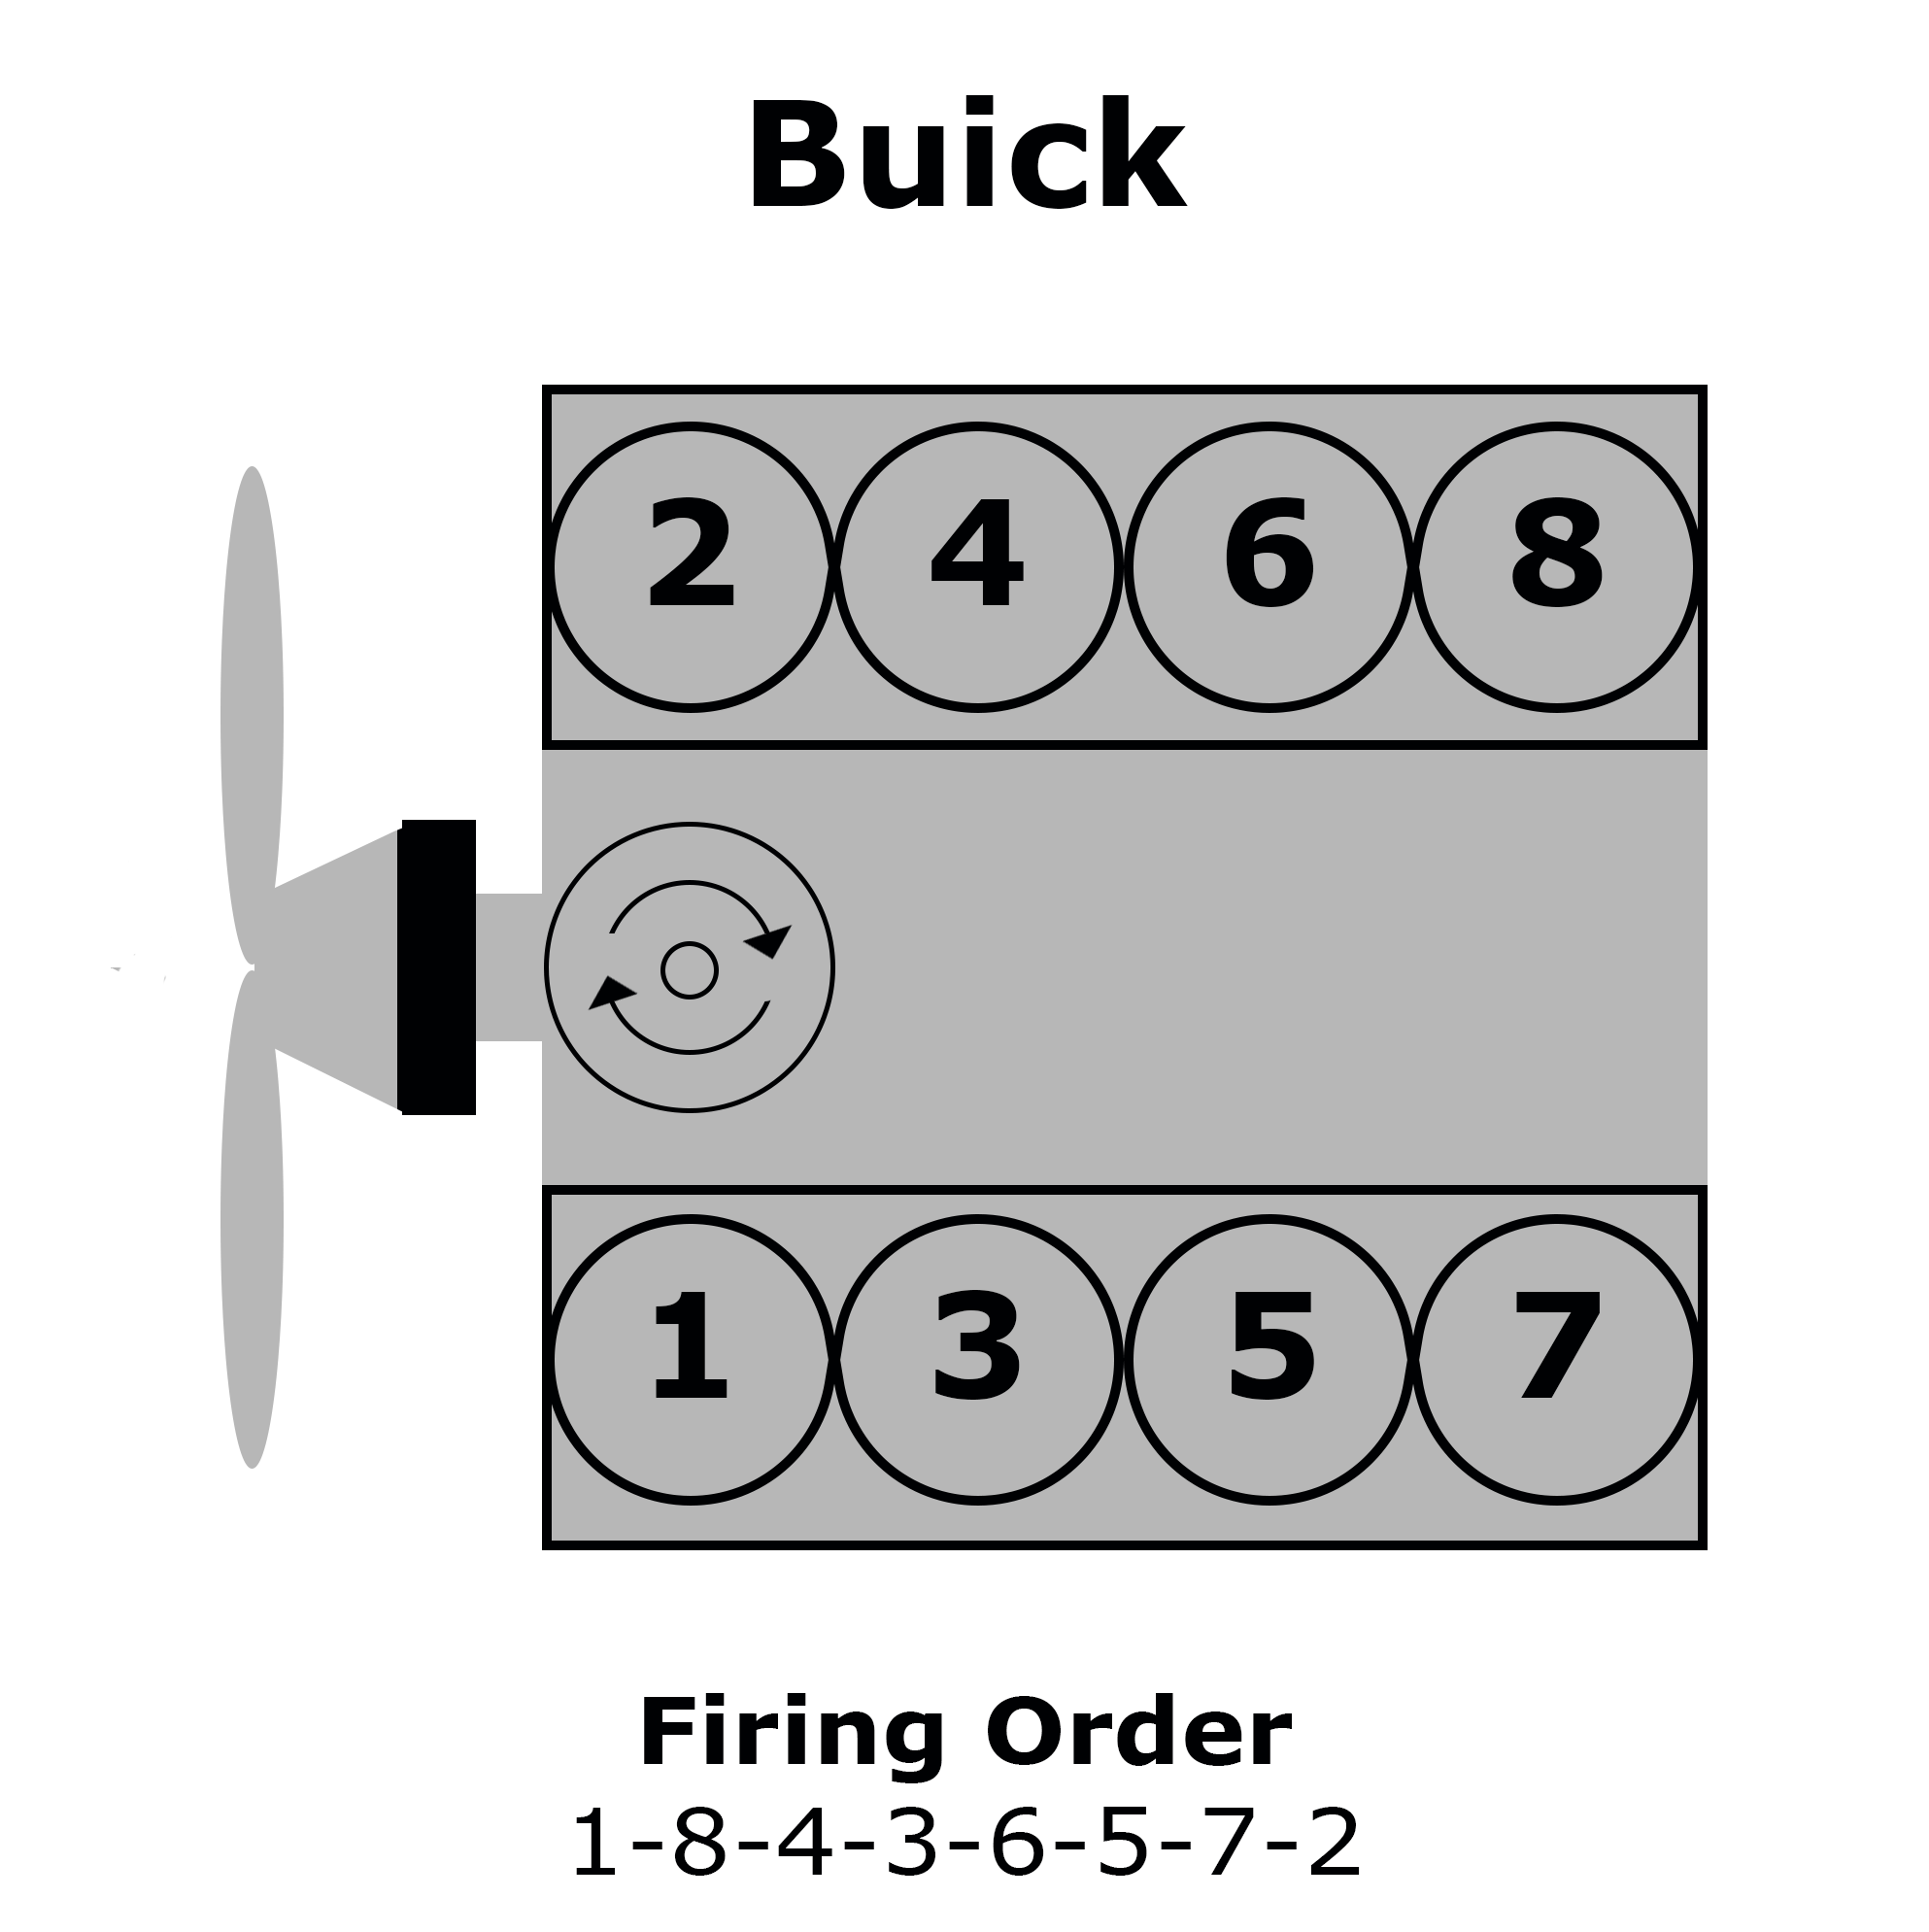 Buick V8 Cylinder Numbering, Distributor Rotation, and Firing Order